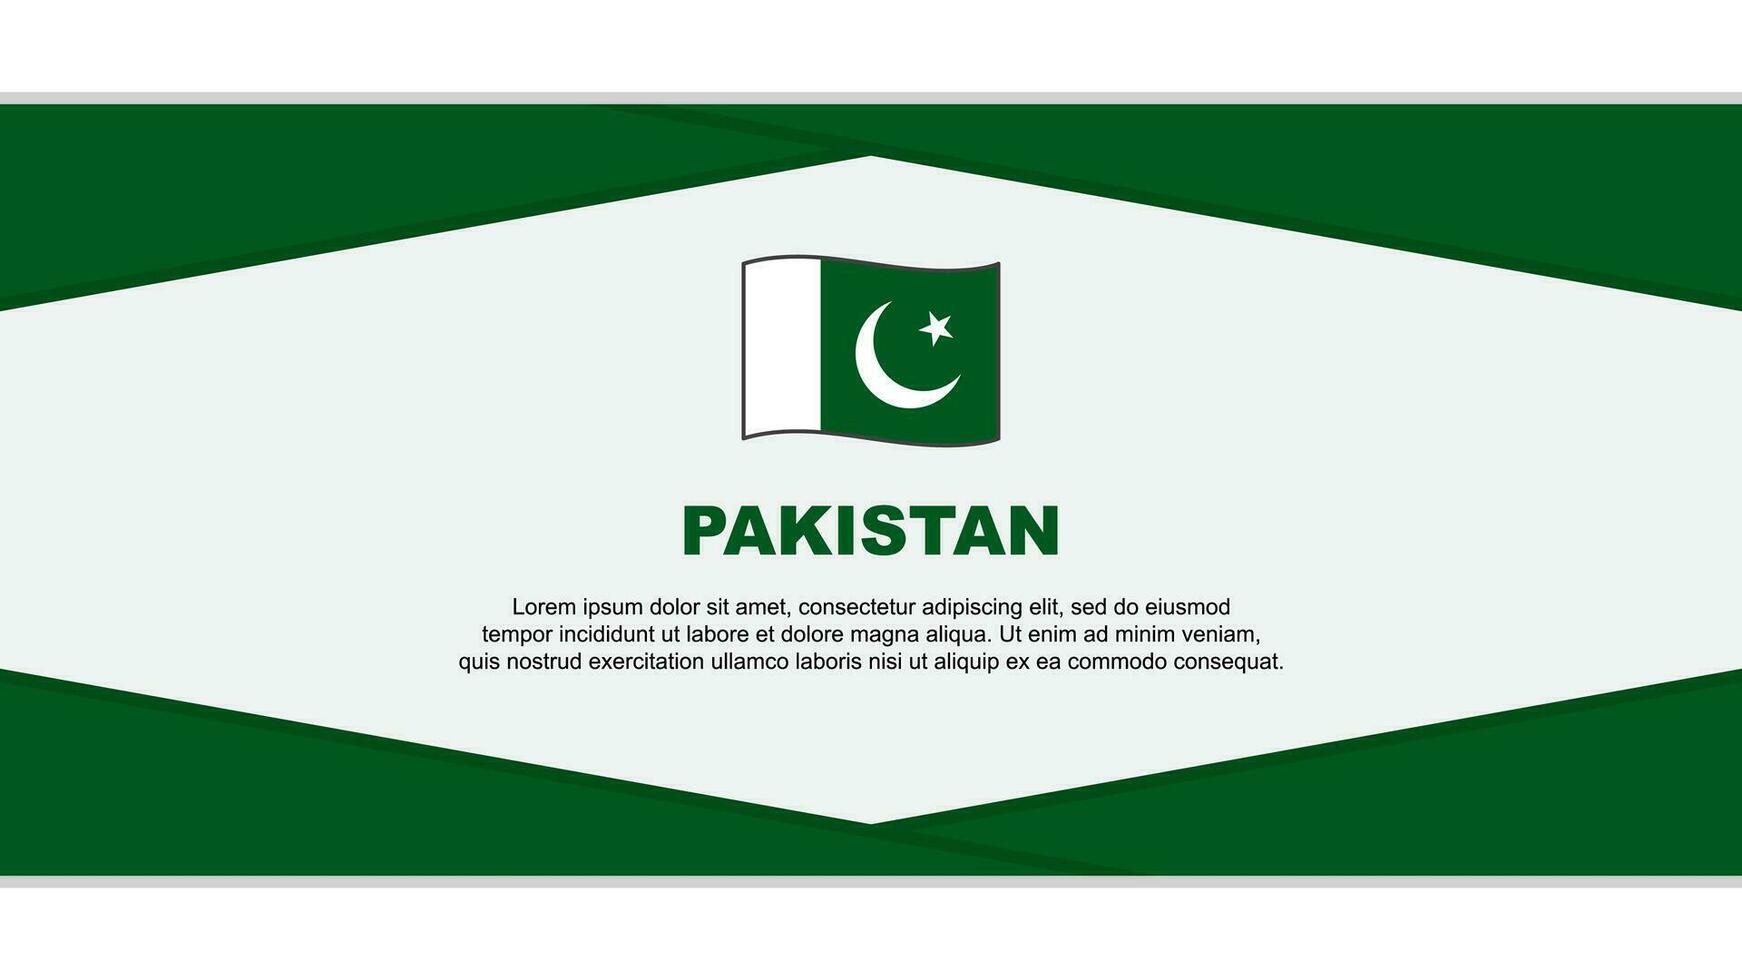 Pakistan Flagge abstrakt Hintergrund Design Vorlage. Pakistan Unabhängigkeit Tag Banner Karikatur Vektor Illustration. Pakistan Vektor